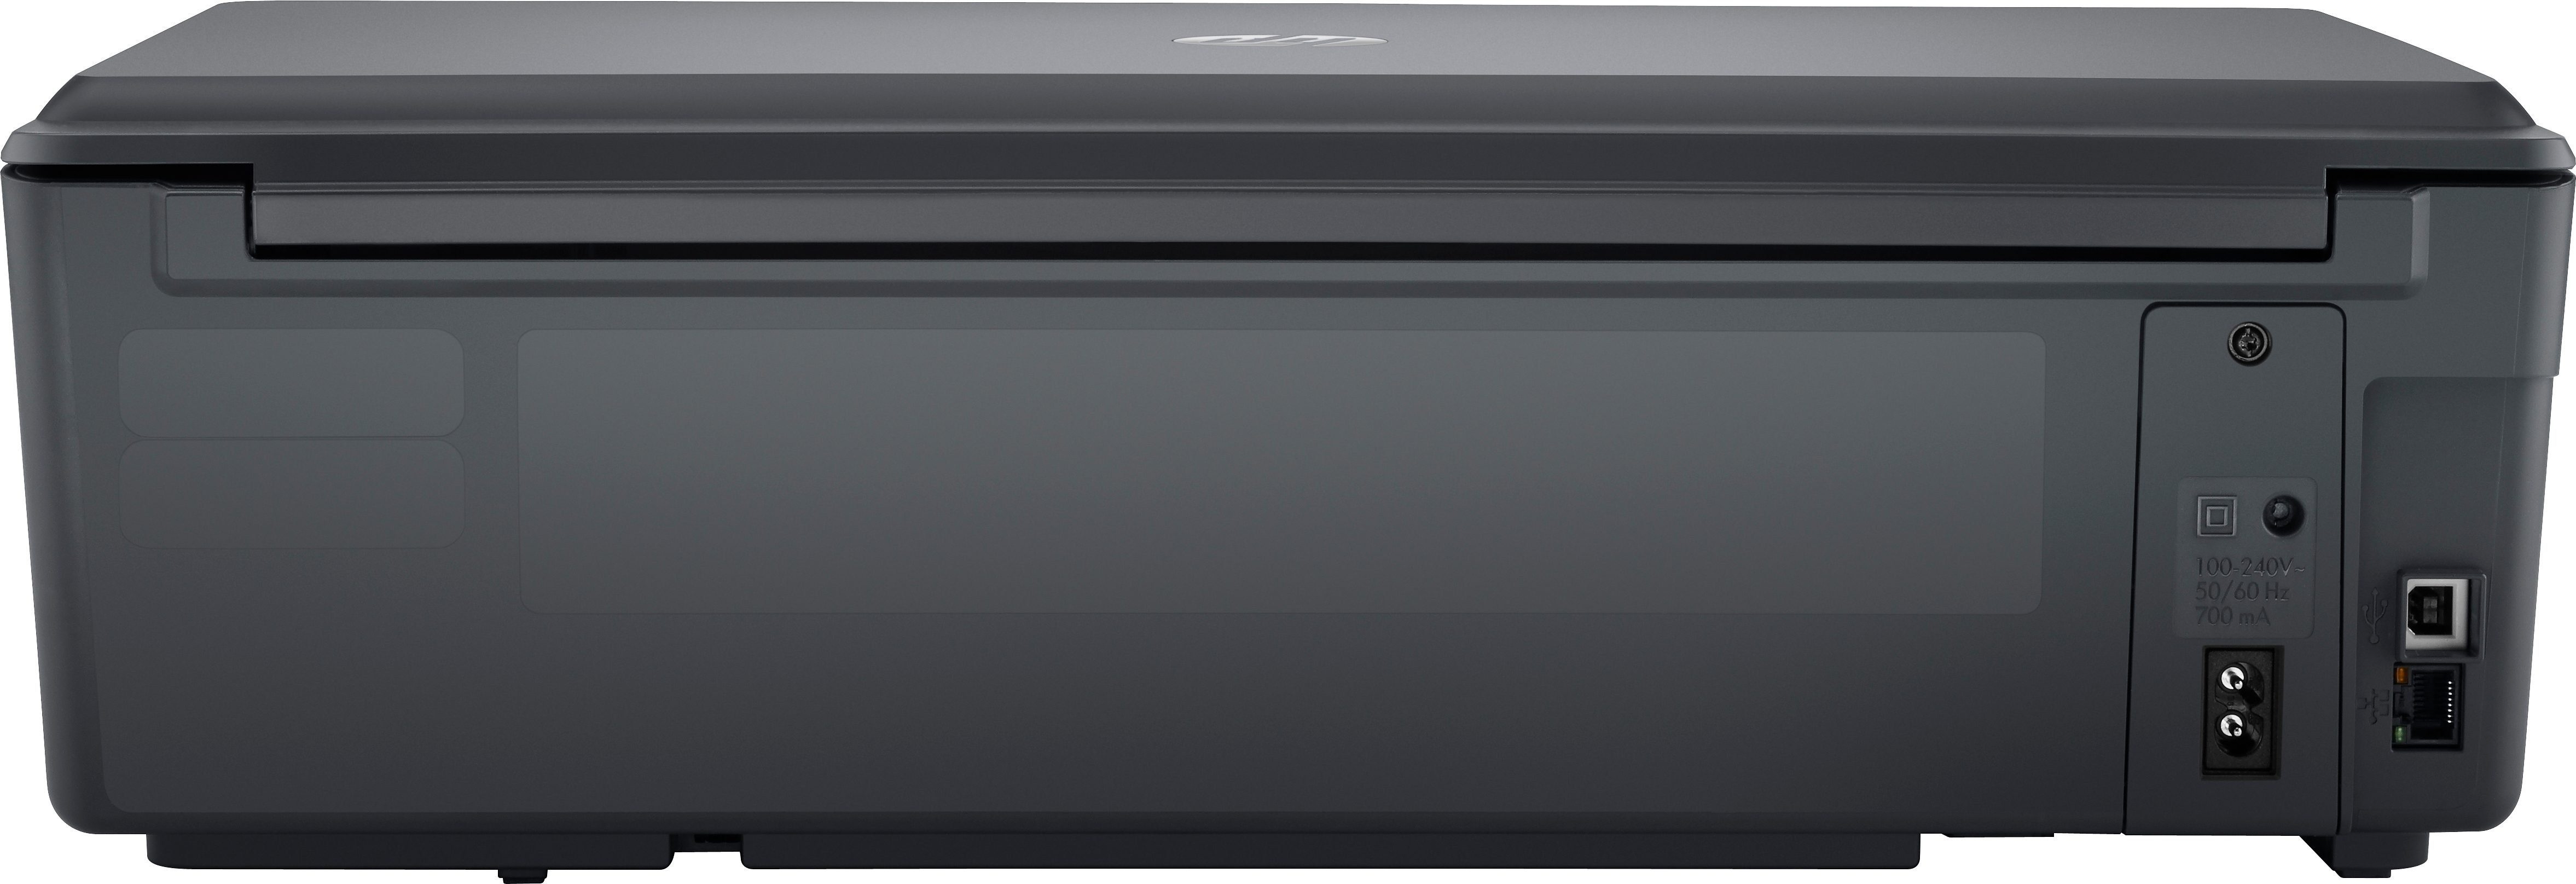 HP Officejet Pro 6230 ePrinter Tintenstrahldrucker, Ink HP+ (Wi-Fi), (WLAN kompatibel) Instant